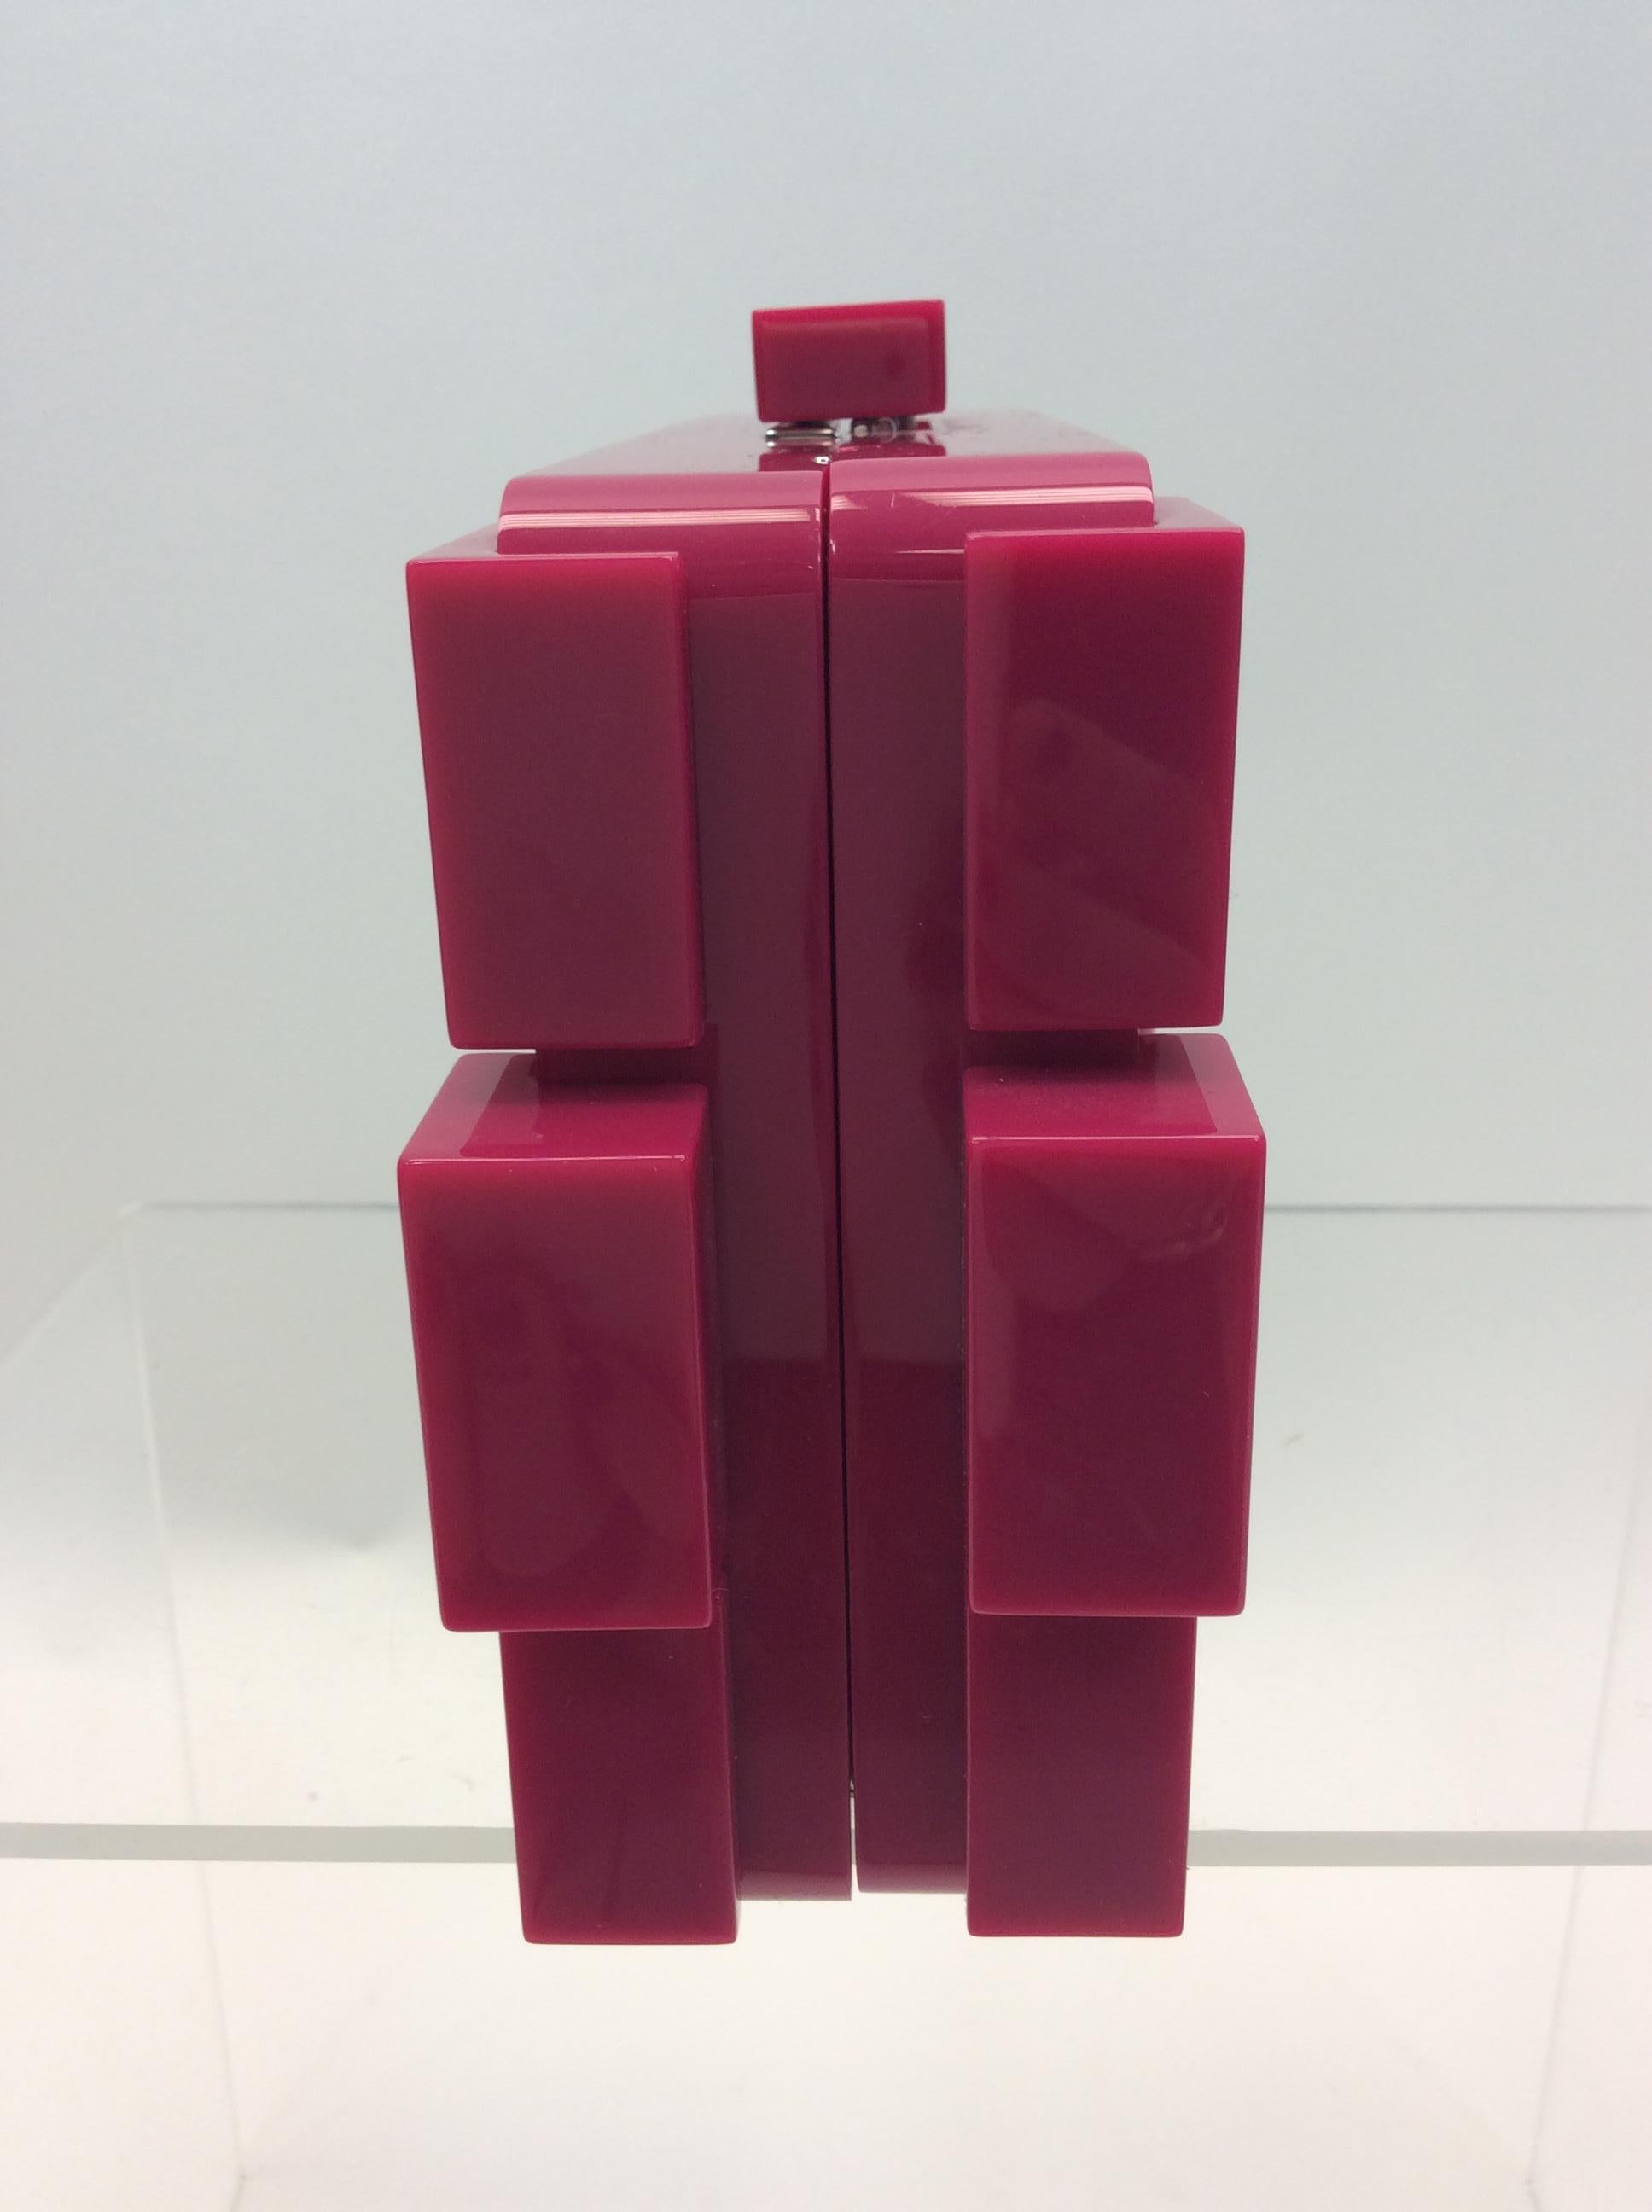 Chanel Pink LEGO Plexiglass Clutch/Crossbody
$5299
Made in Italy
6.5